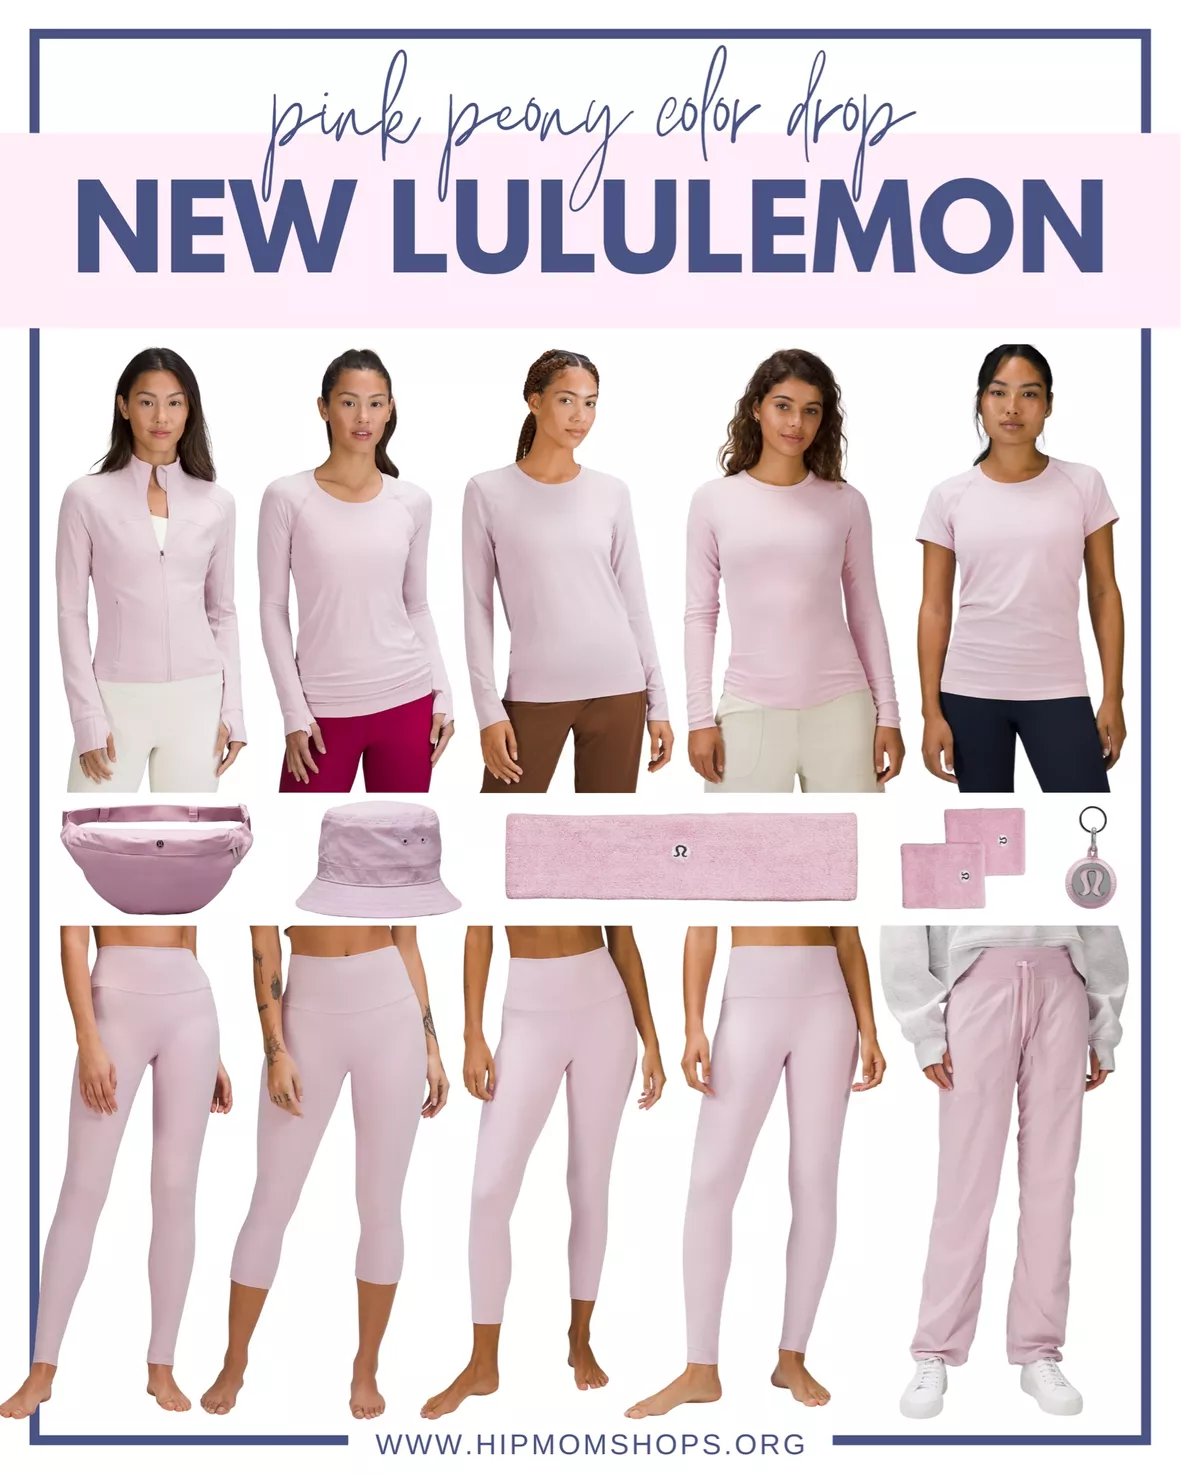 LULULEMON SUMMER OUTFIT IDEAS  Styling Lululemon for Summer